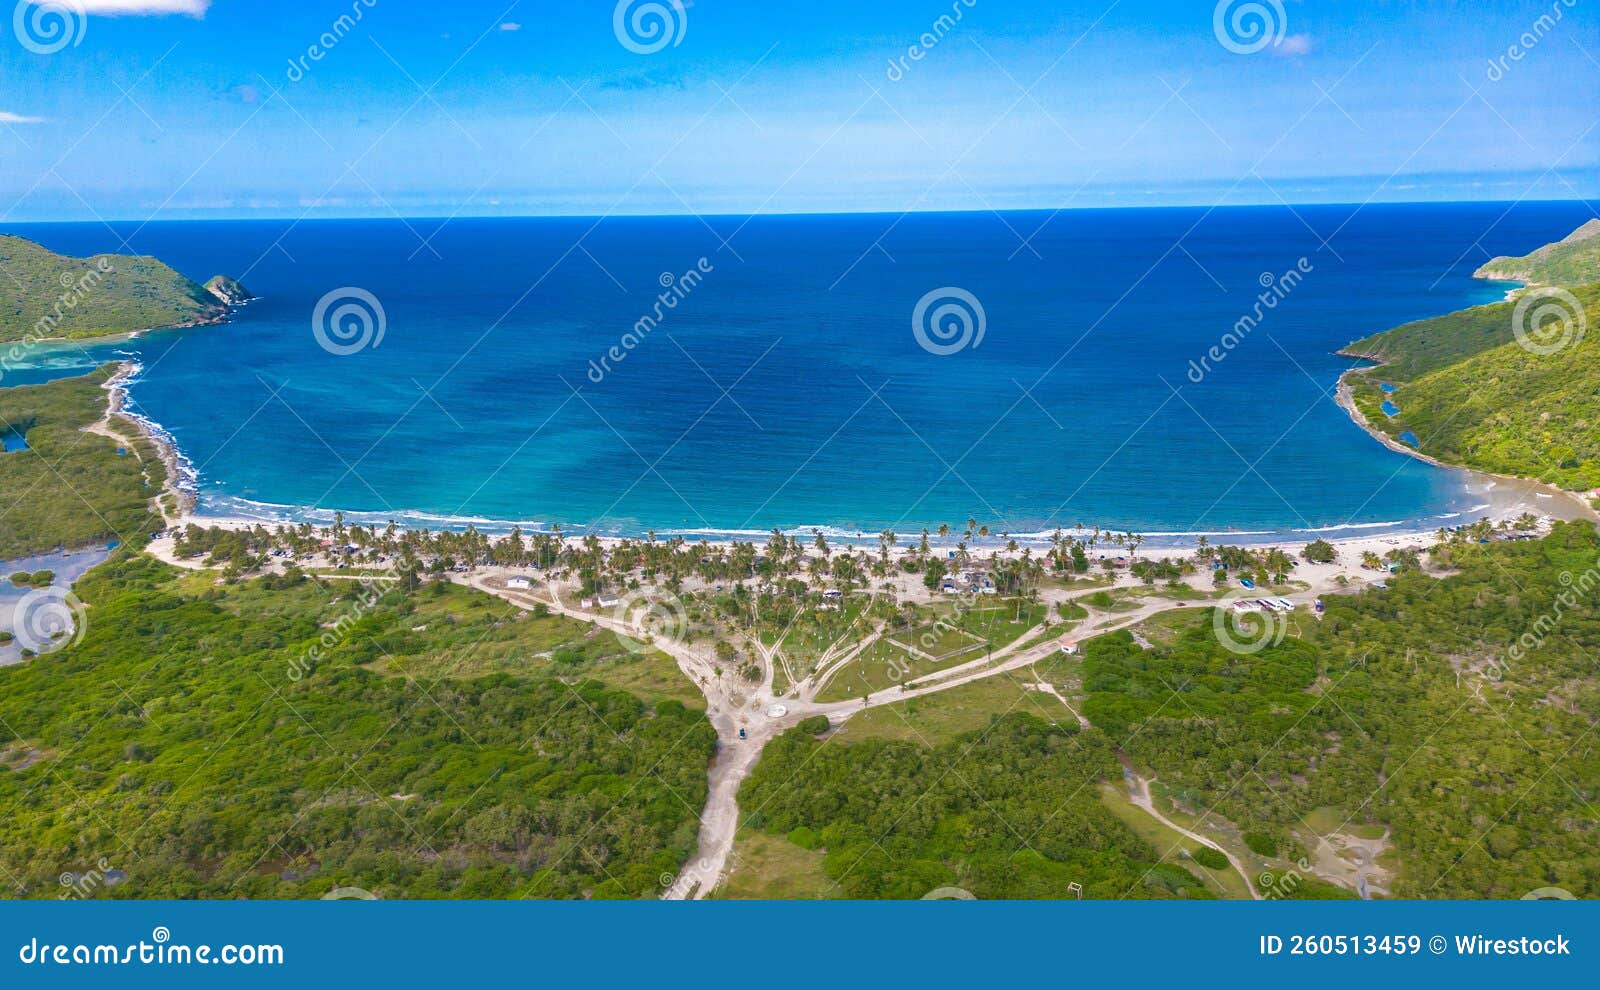 aerial view of the beautiful sunny bahia de patanemo beach in puerto cabello, venezuela